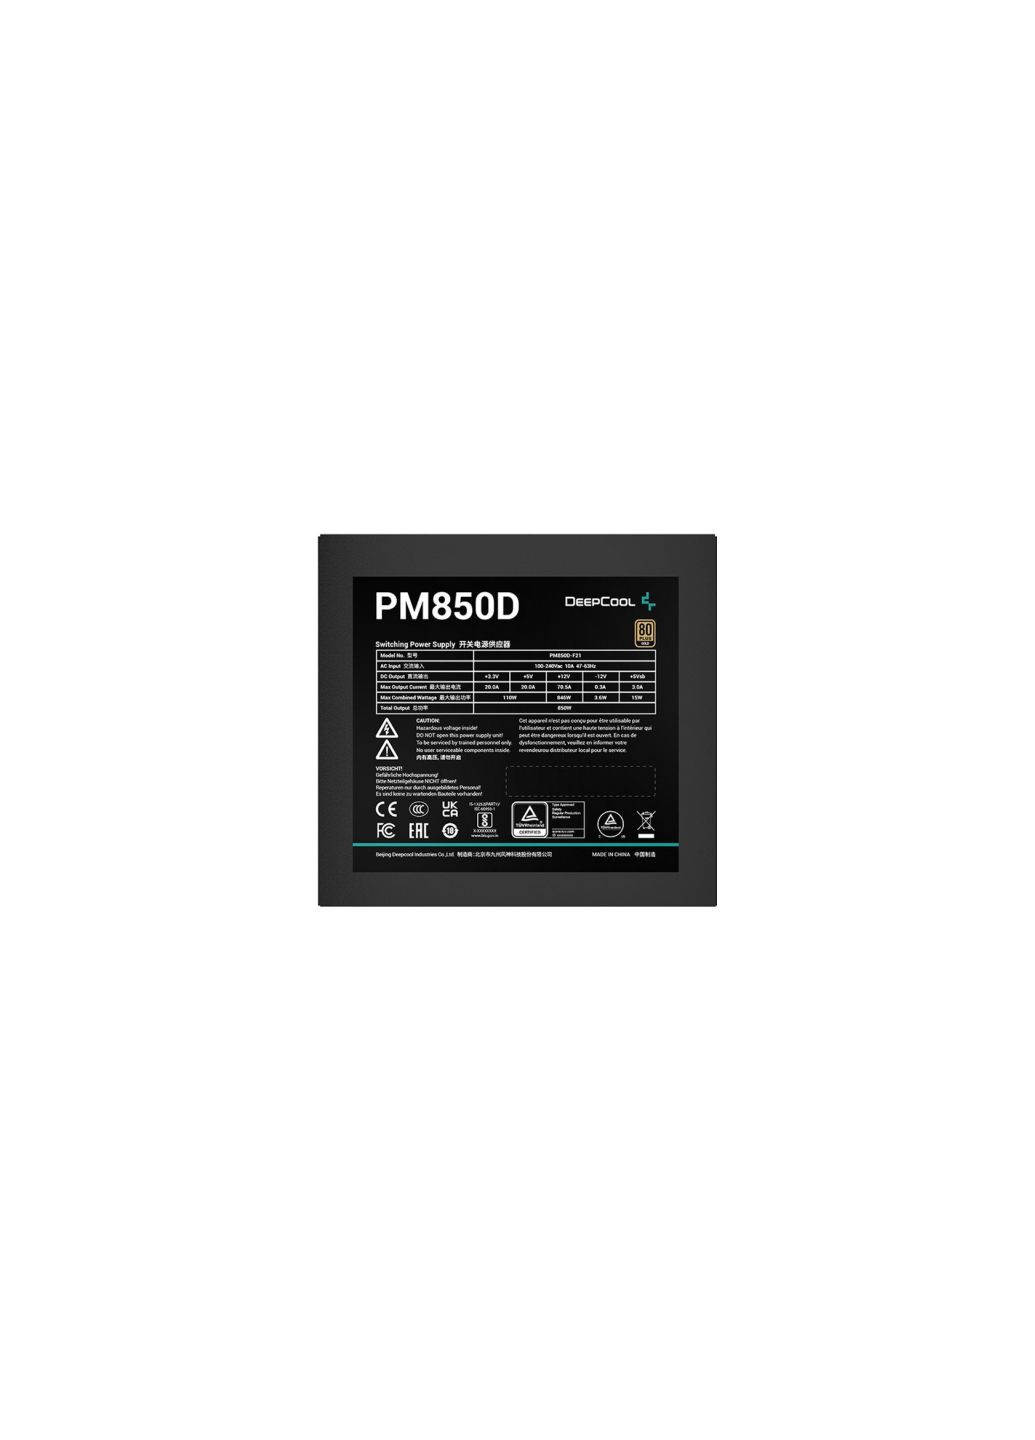 Блок питания (RPM850D-FA0B-EU) DeepCool 850w pm850d (275080013)